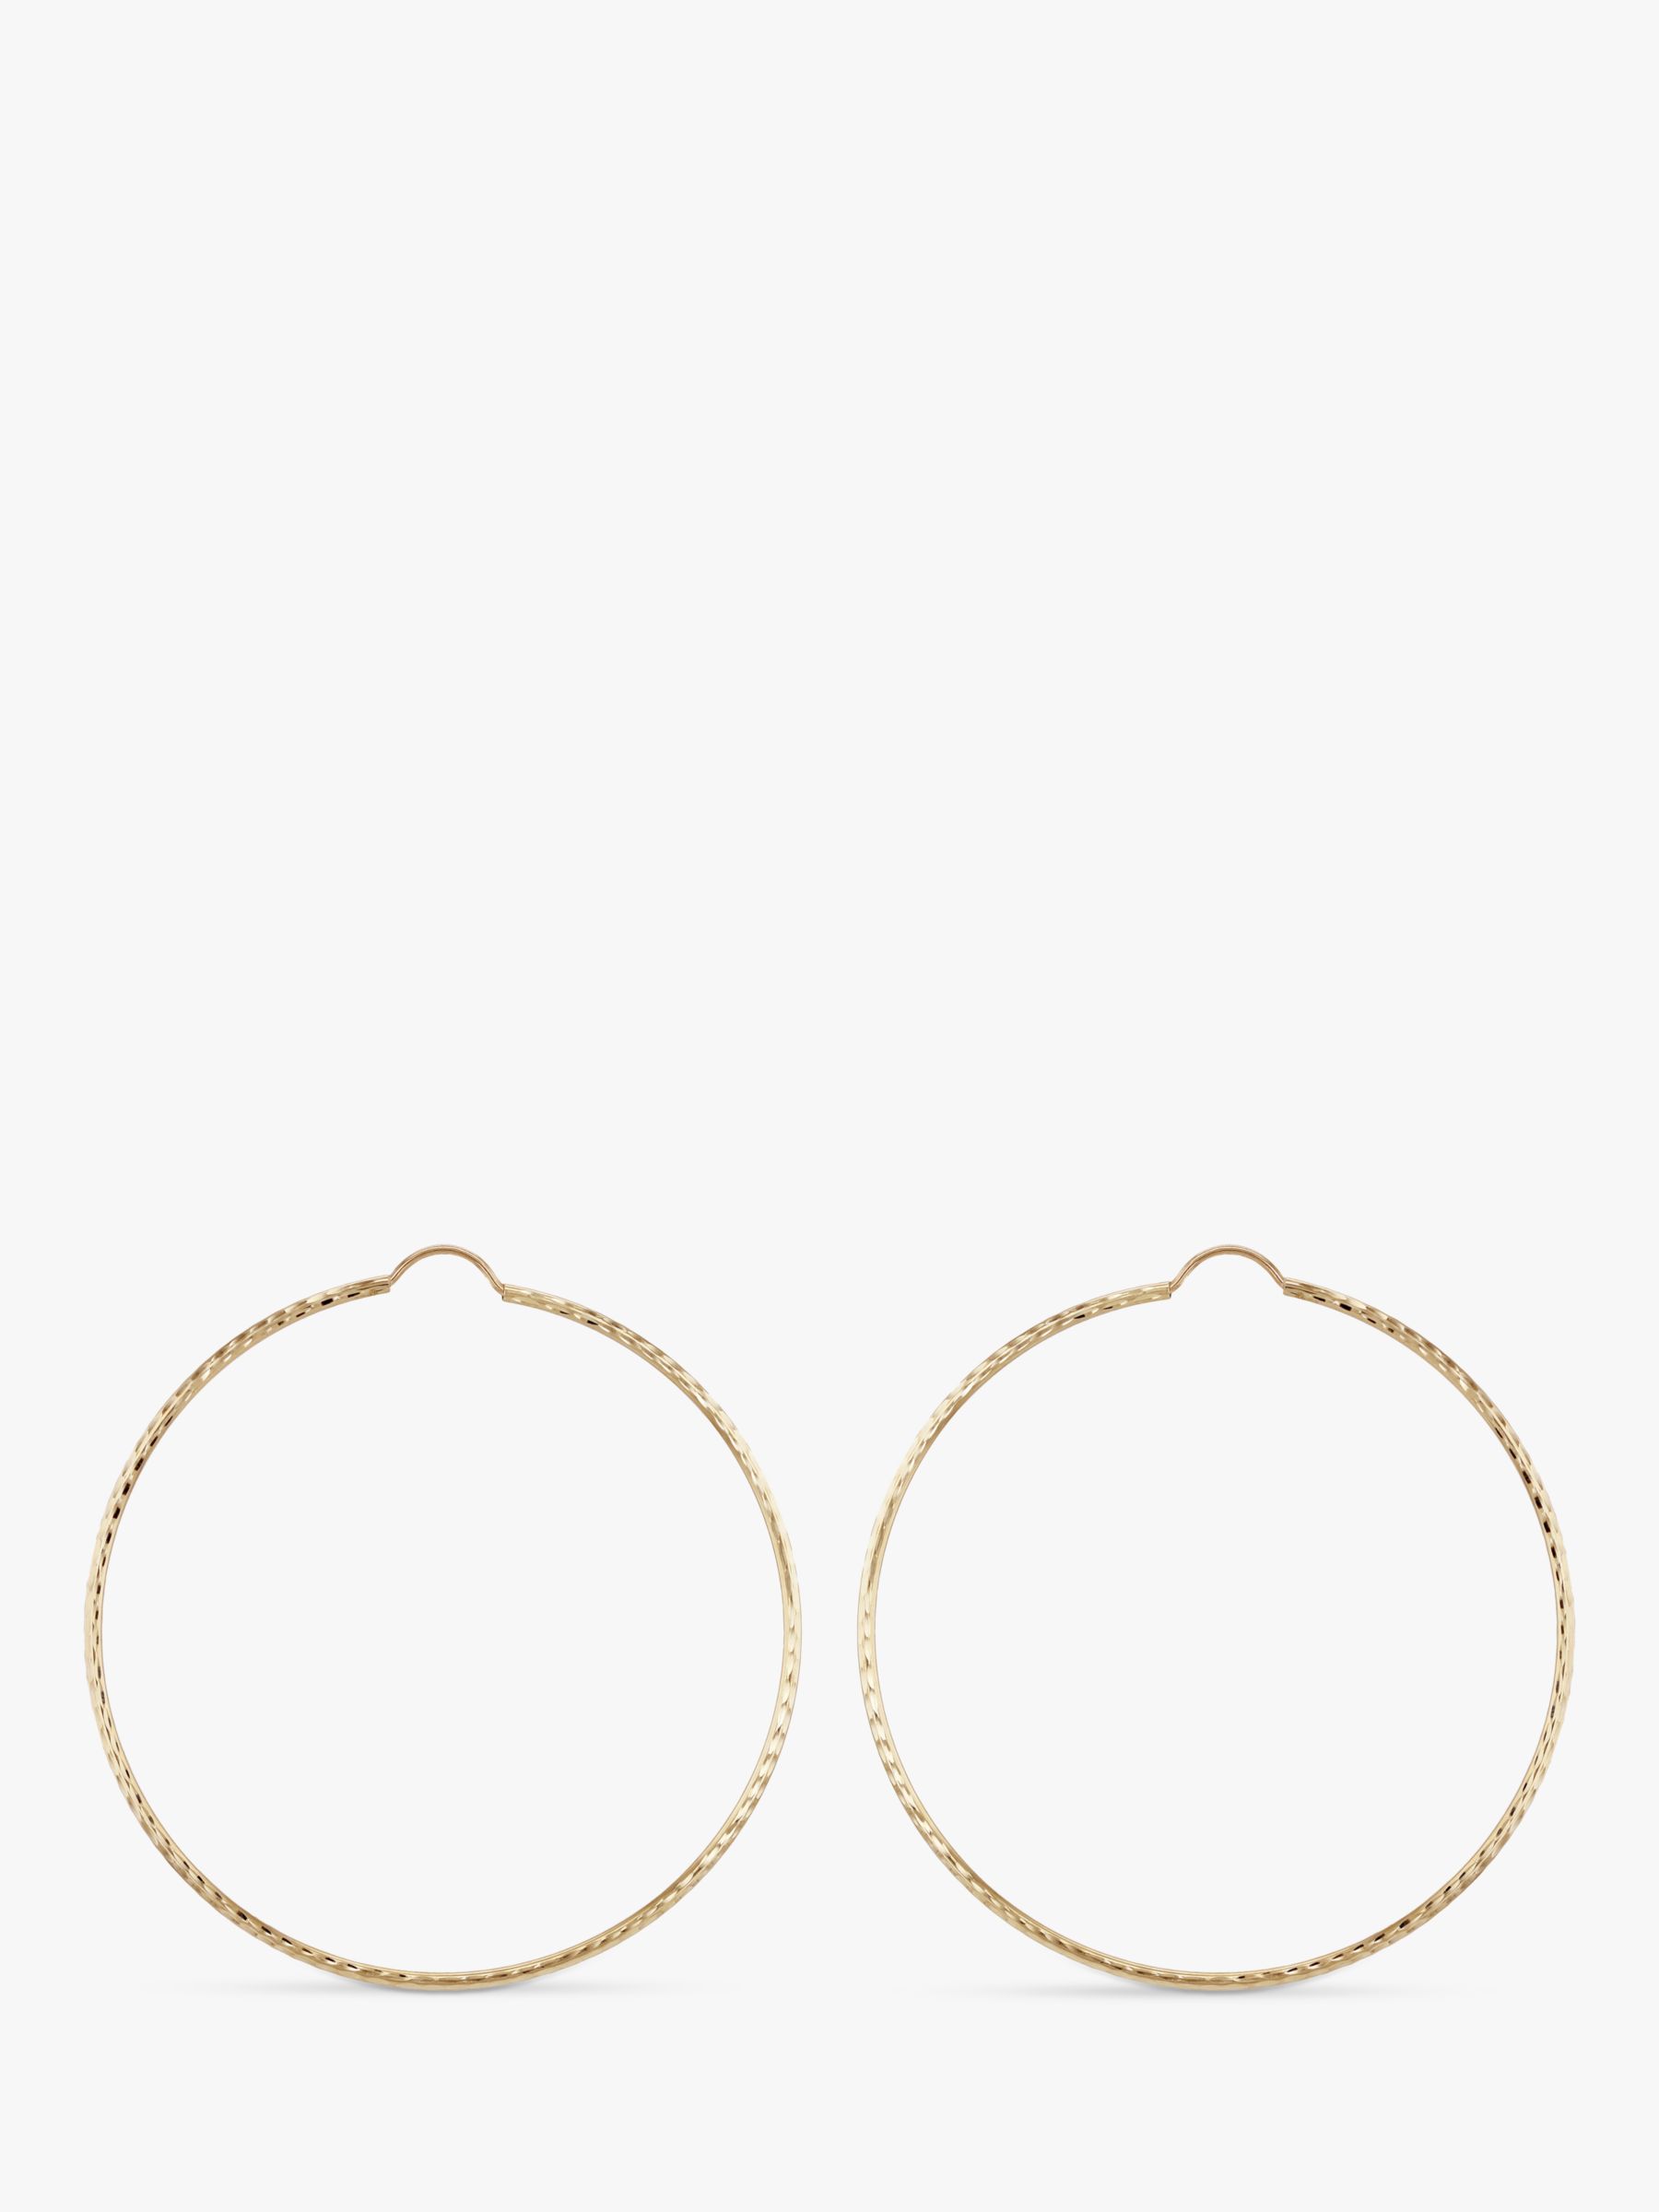 IBB 9ct Large Textured Hoop Earrings, Gold